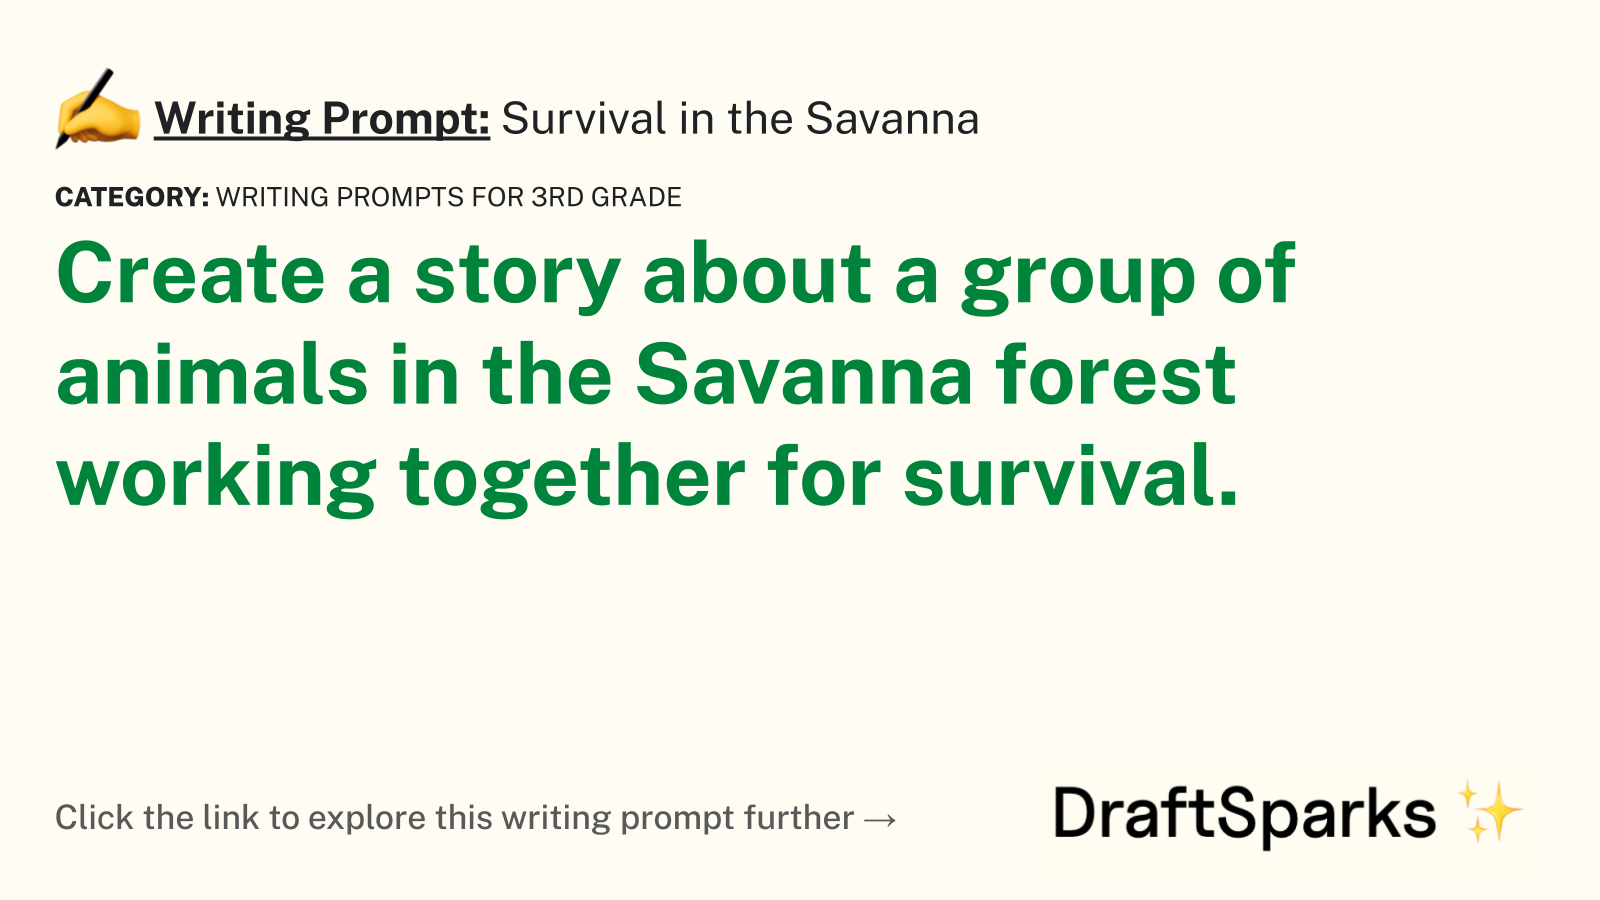 Survival in the Savanna